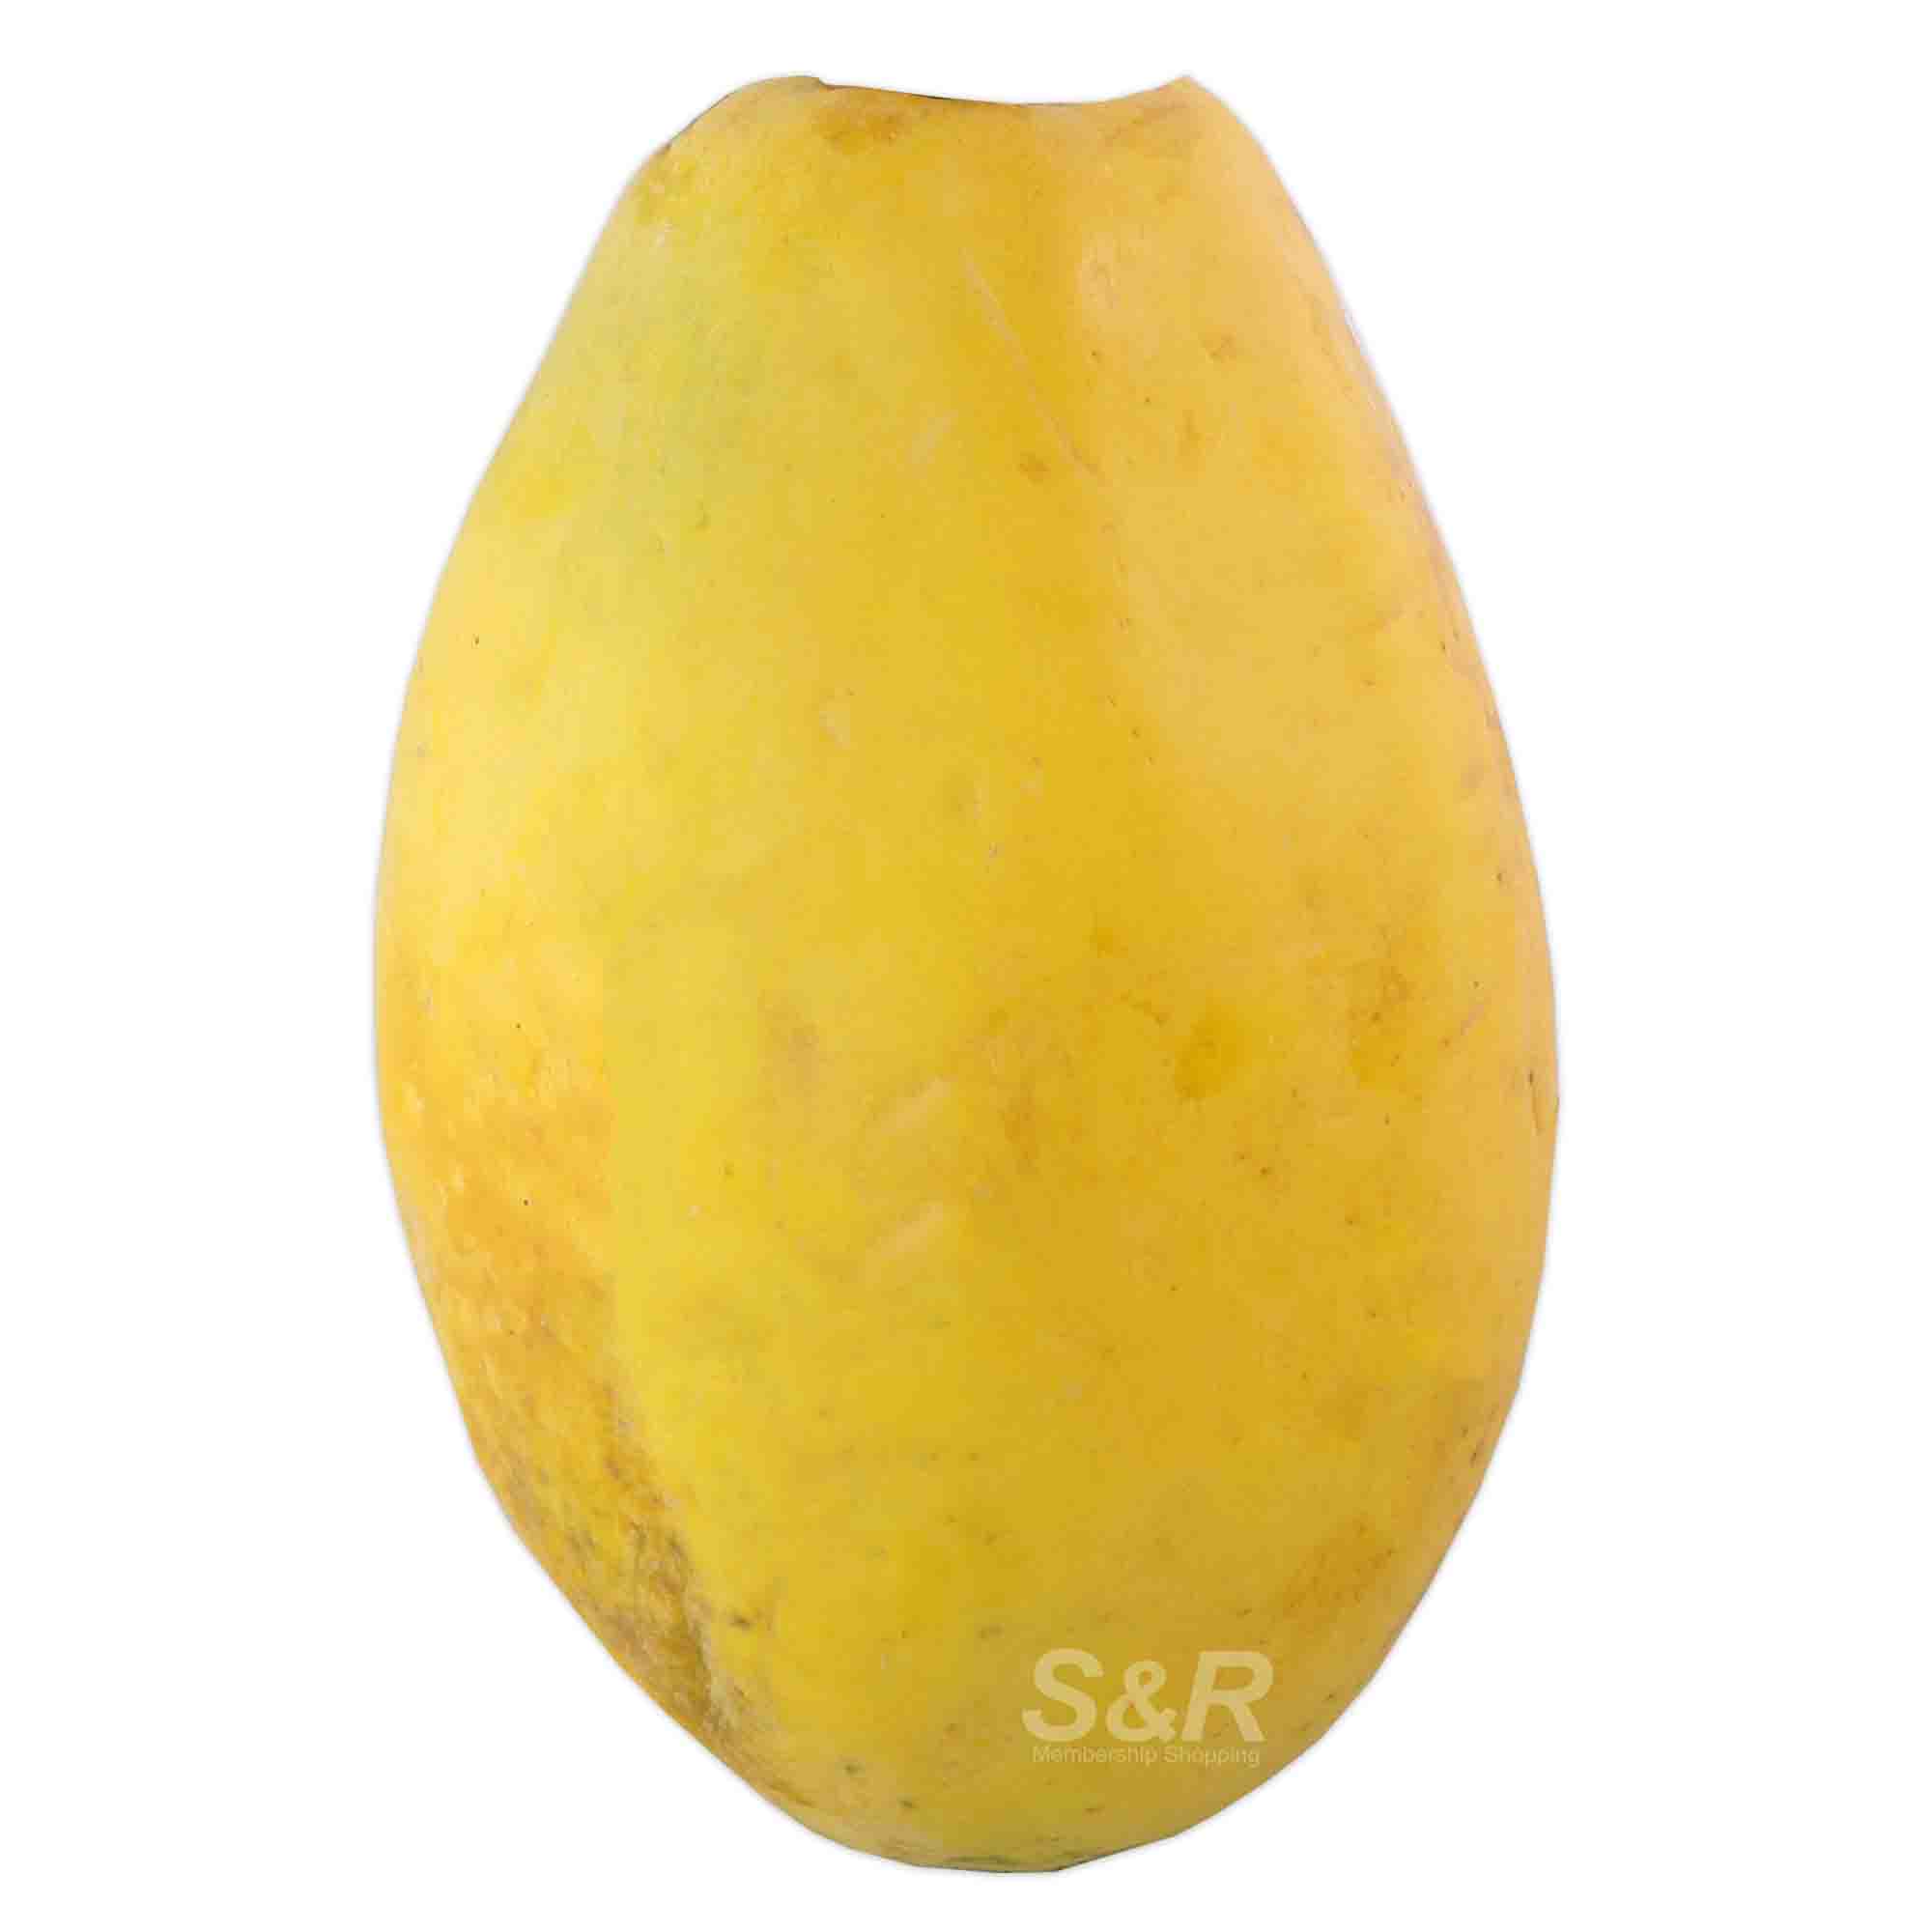 S&R Papaya approx. 1kg